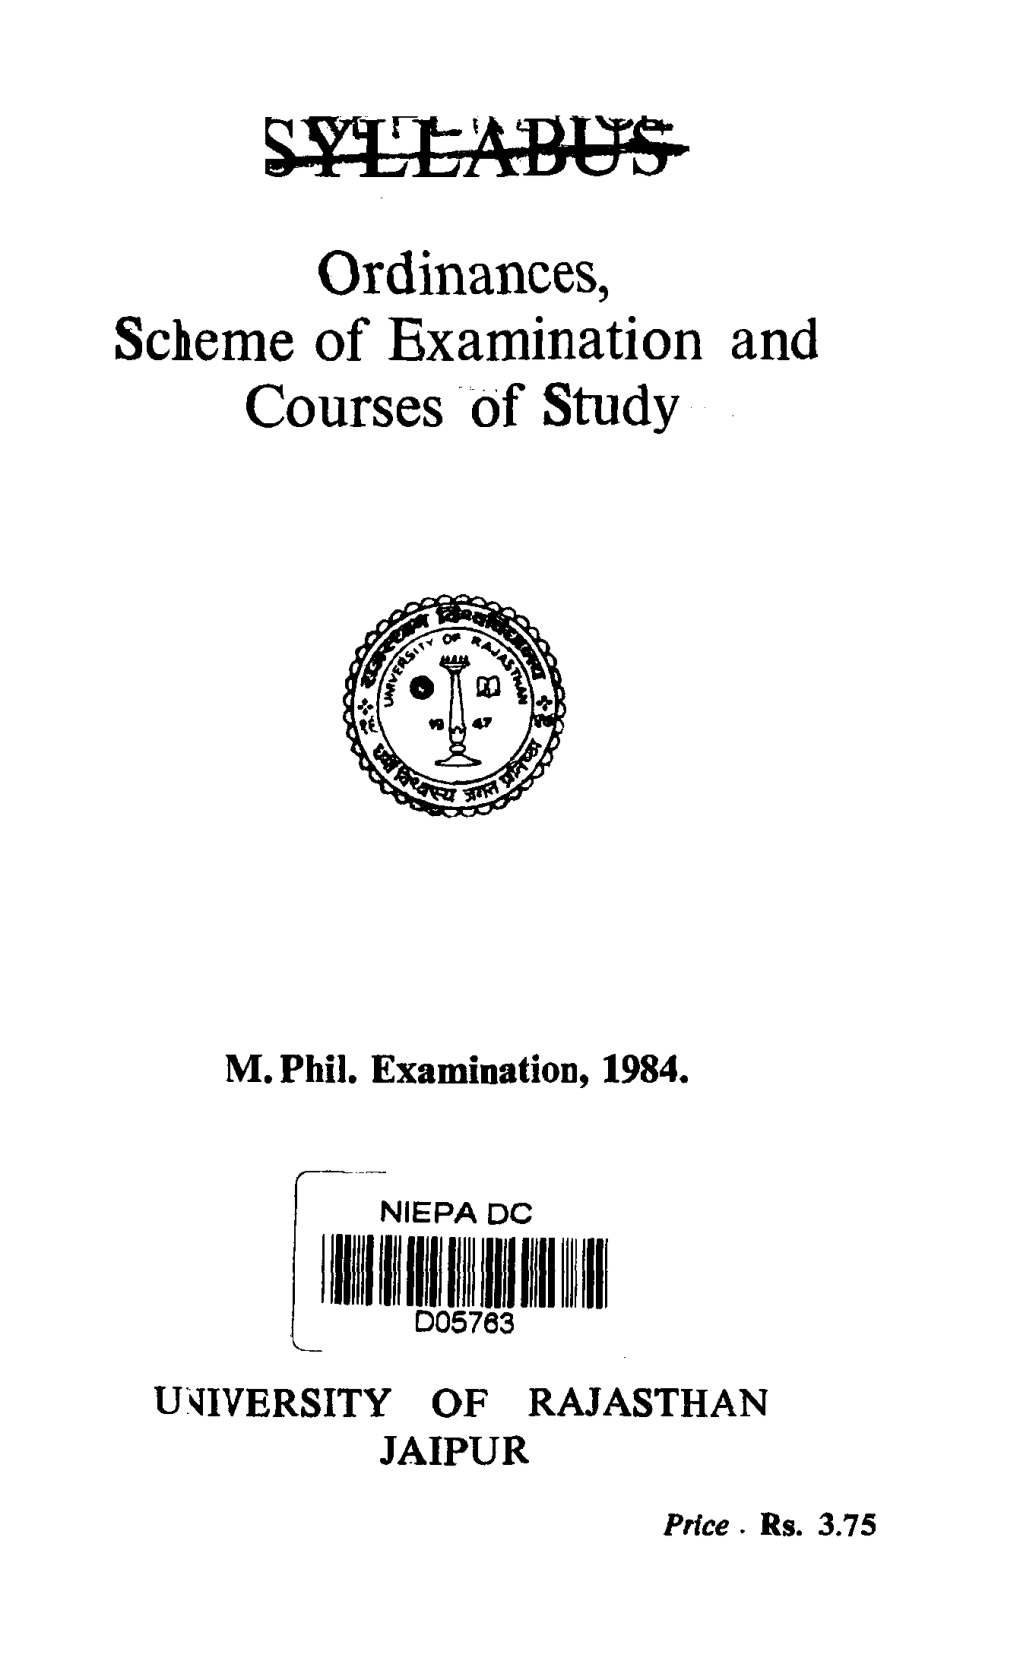 Ordinances, Scheme of Examination and Courses of Study